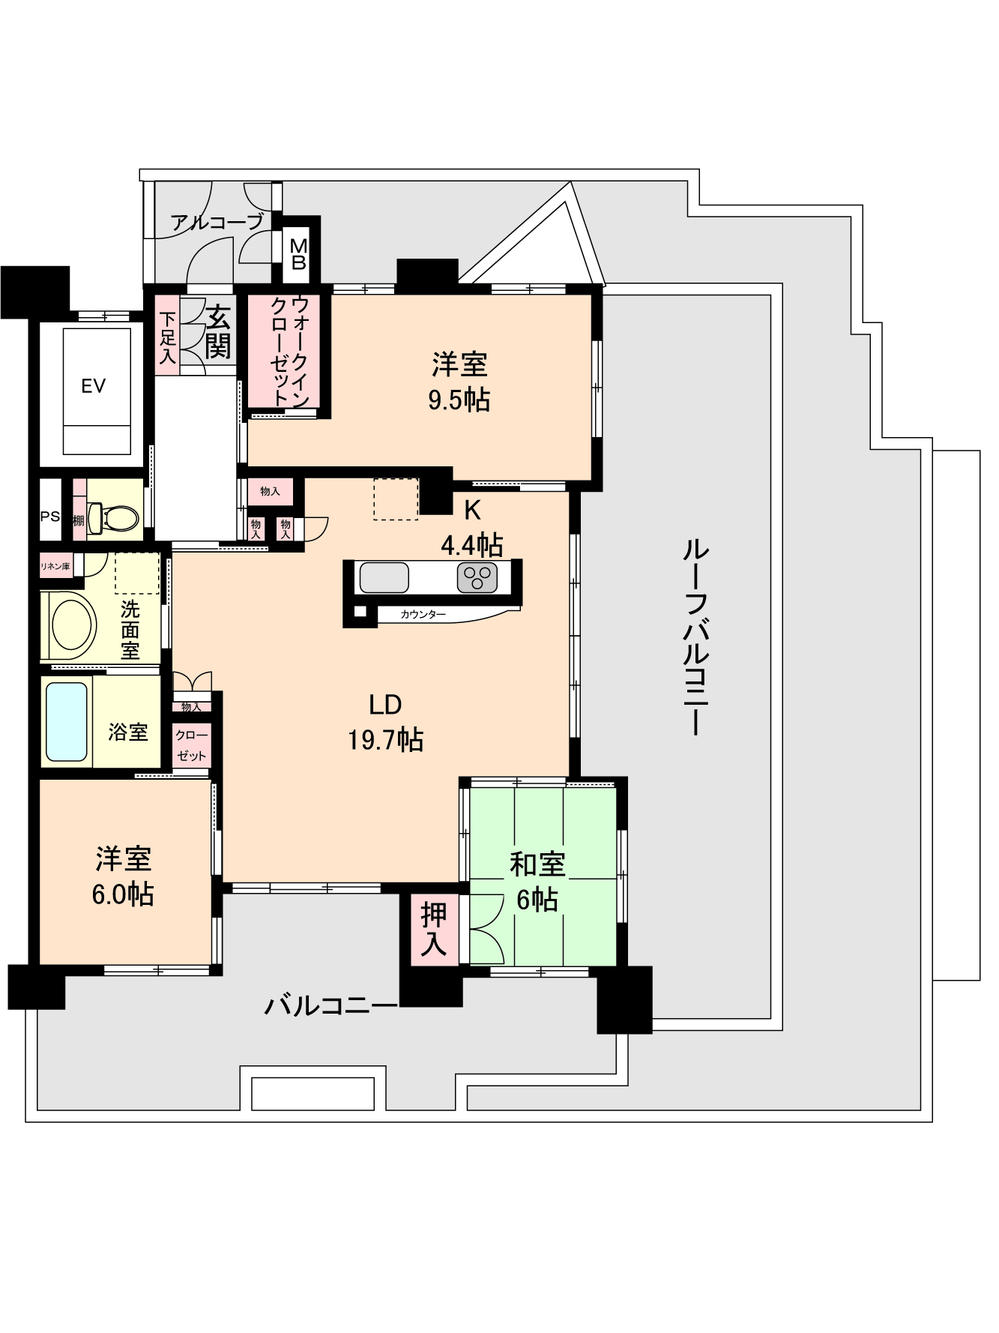 Floor plan. 3LDK + S (storeroom), Price 37,800,000 yen, Occupied area 97.27 sq m , Balcony area 25.92 sq m